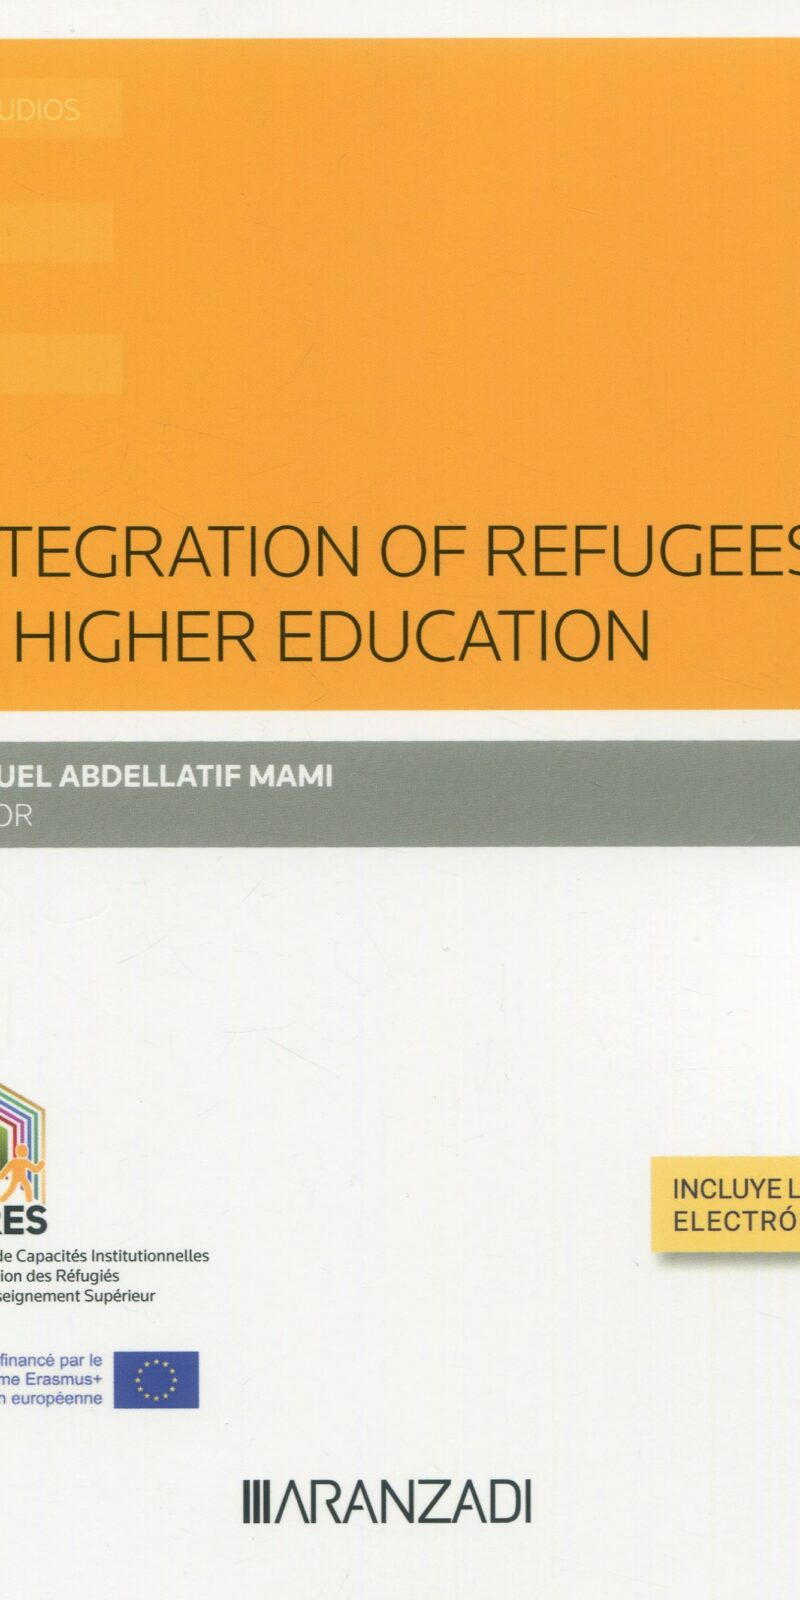 Integration of refugees in higher education 9788411250900